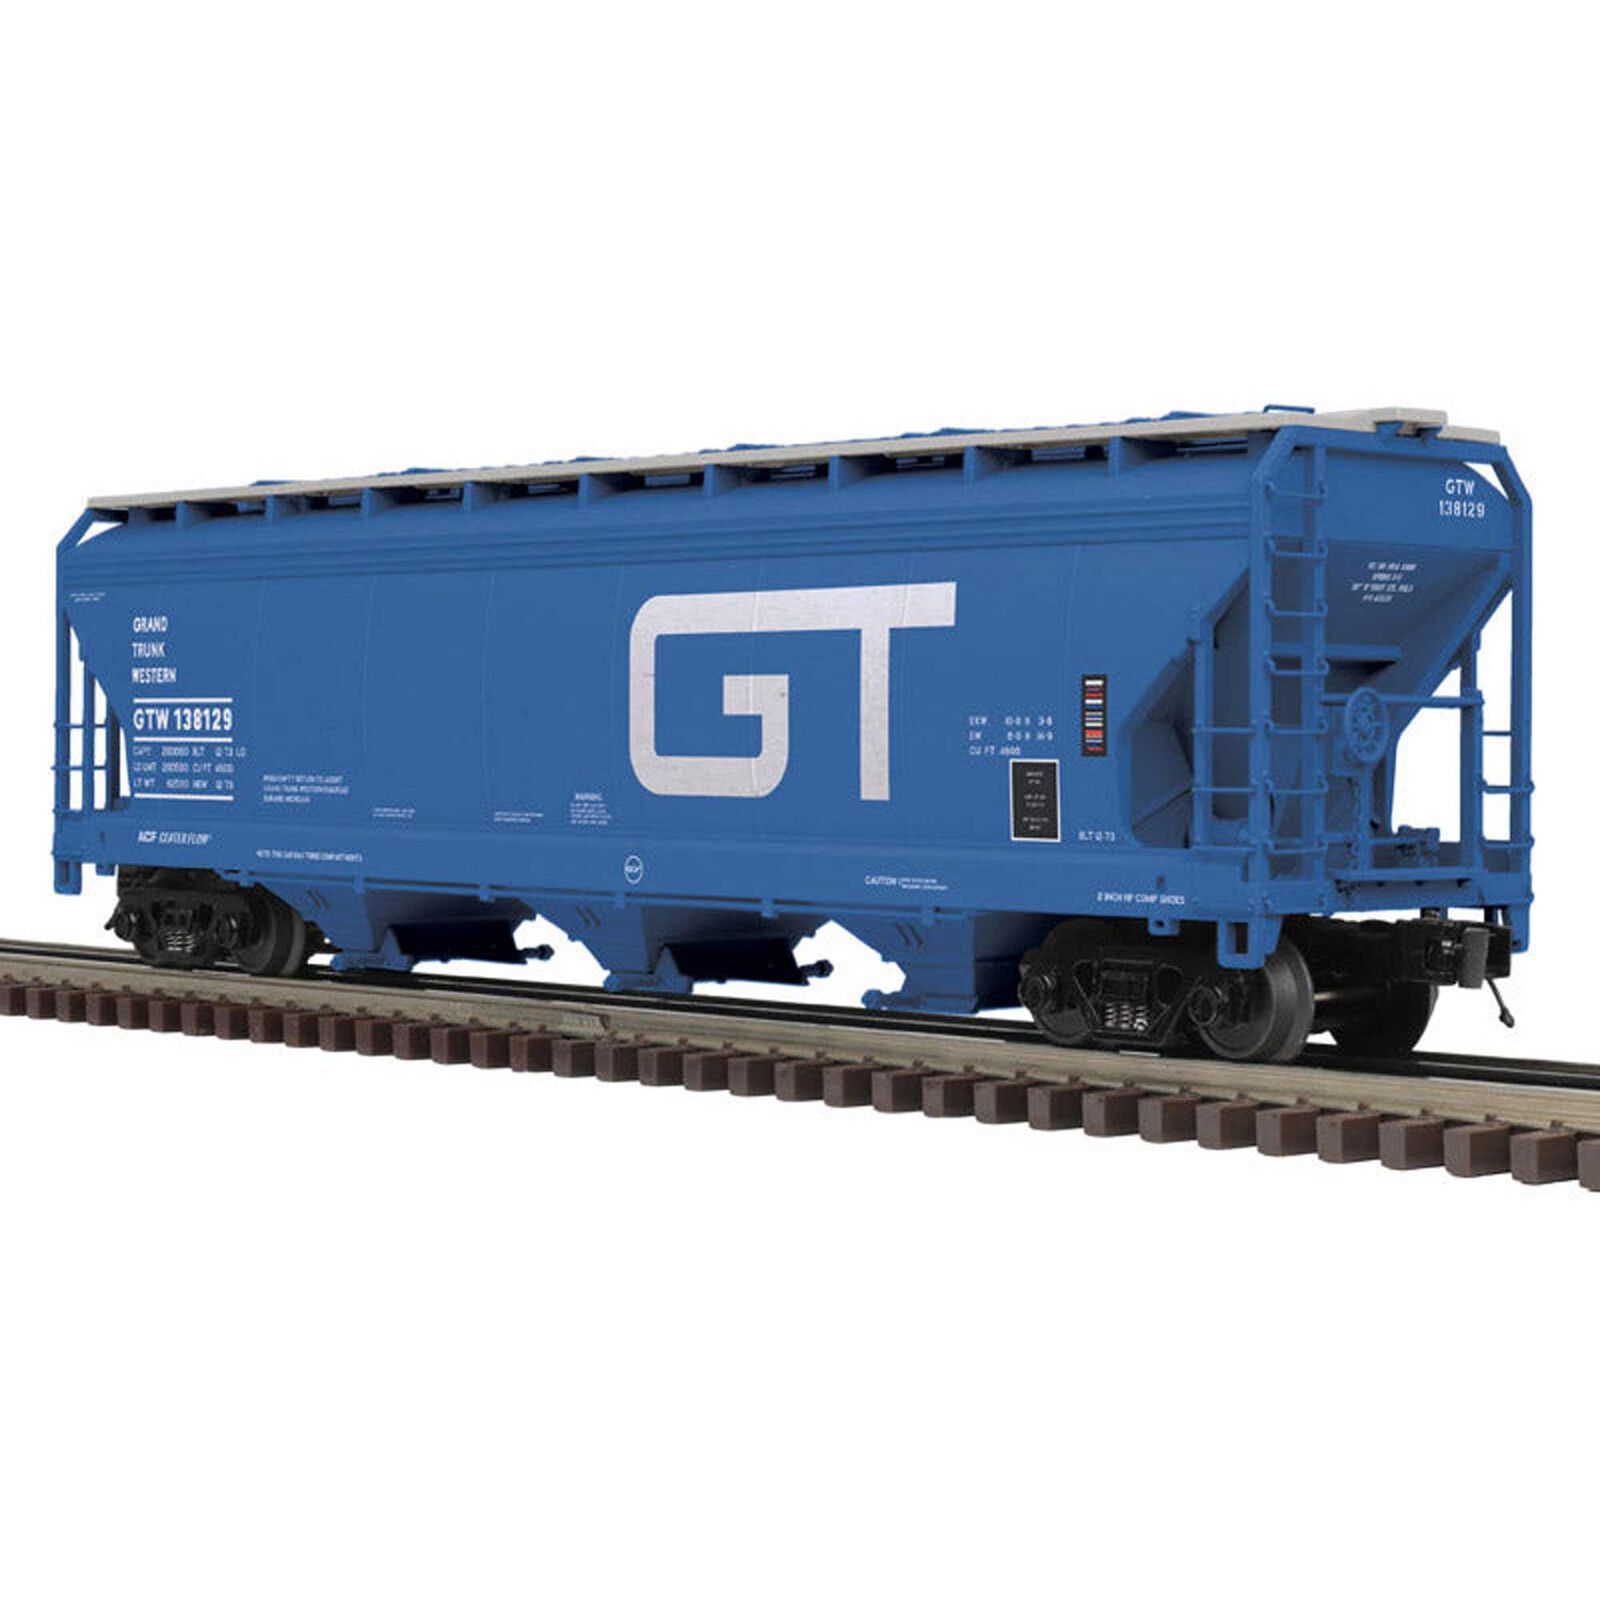 O 3 Rail GTW 138129, 138188 Centerflow Hopper